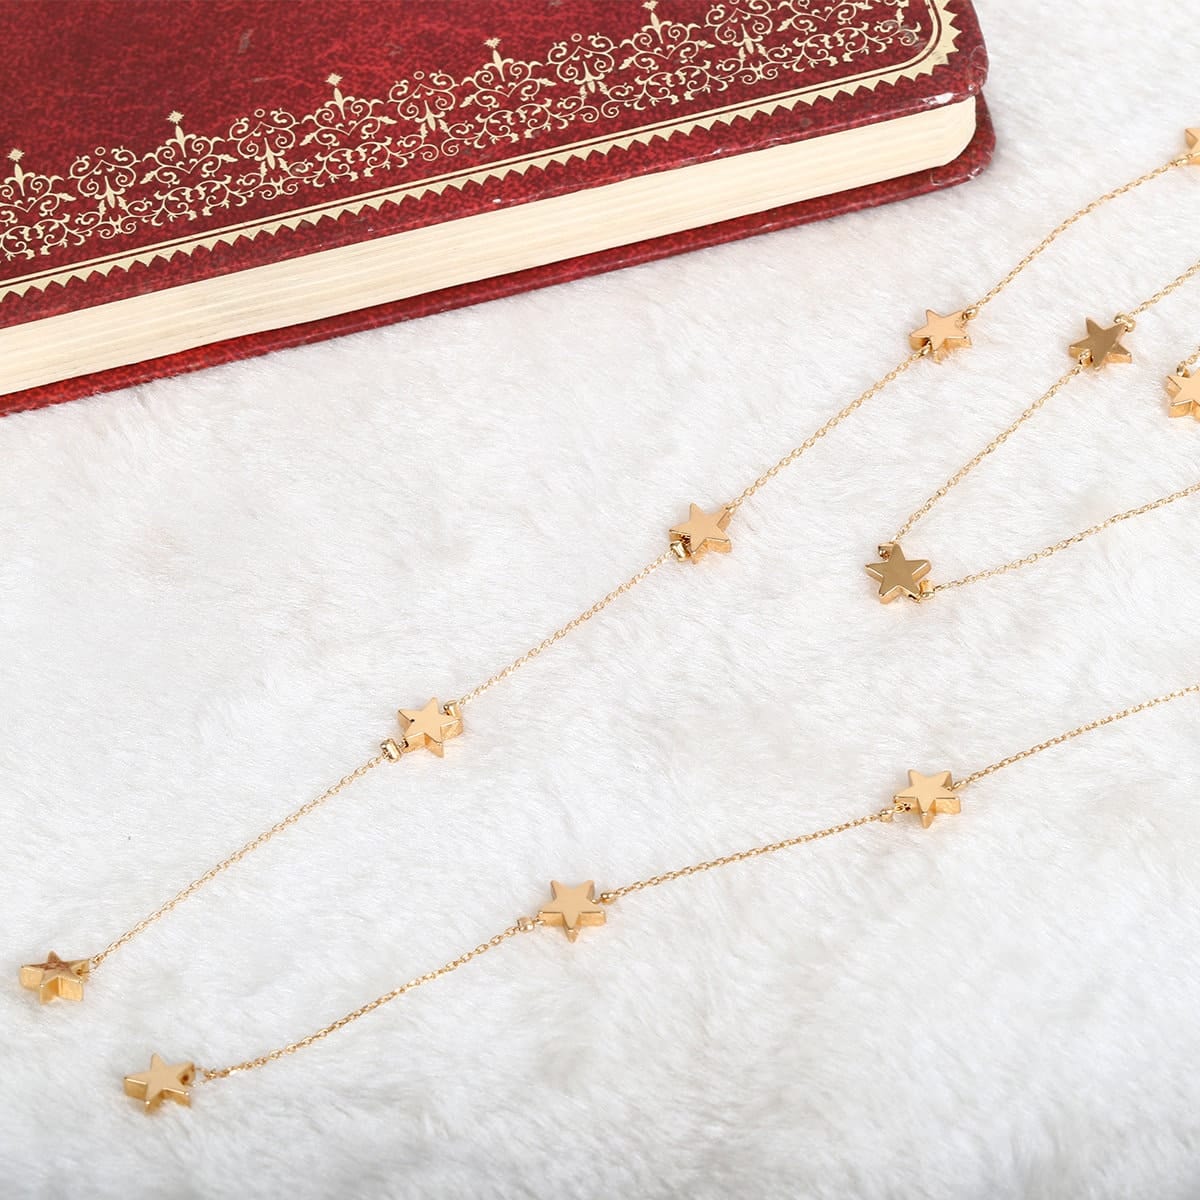 Multi-layer Gold Silver Tone Star Necklace - Dainty Boho Layered Star Necklace - Minimalist Statement Pendant Necklace - ArtGalleryZen